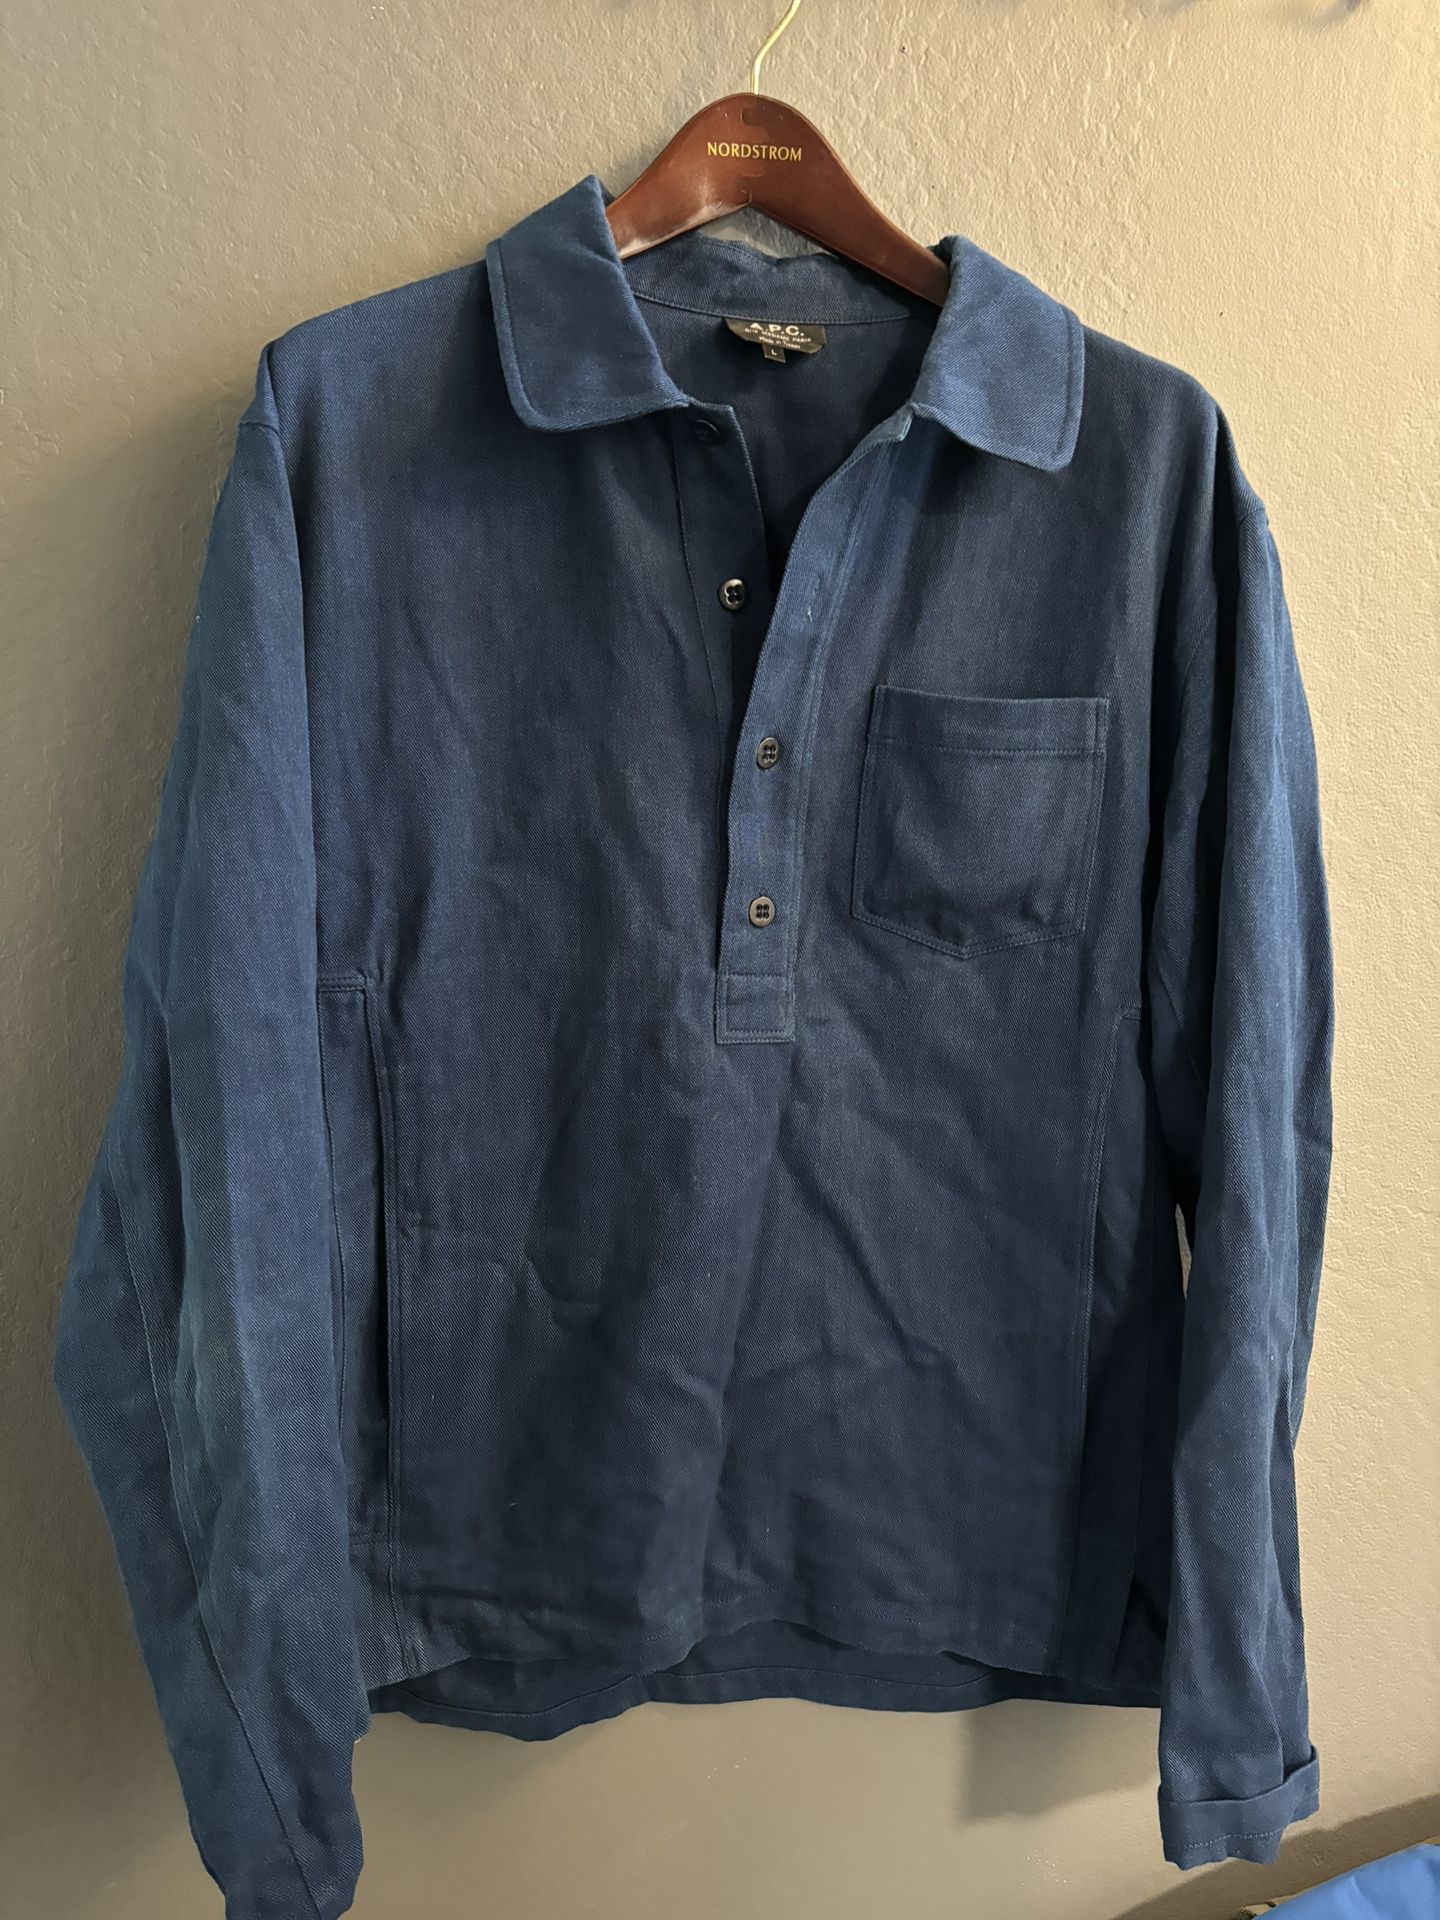 Apc Haddock Liquette Shirt Jacket men’s large denim material very nice originally paid 250 